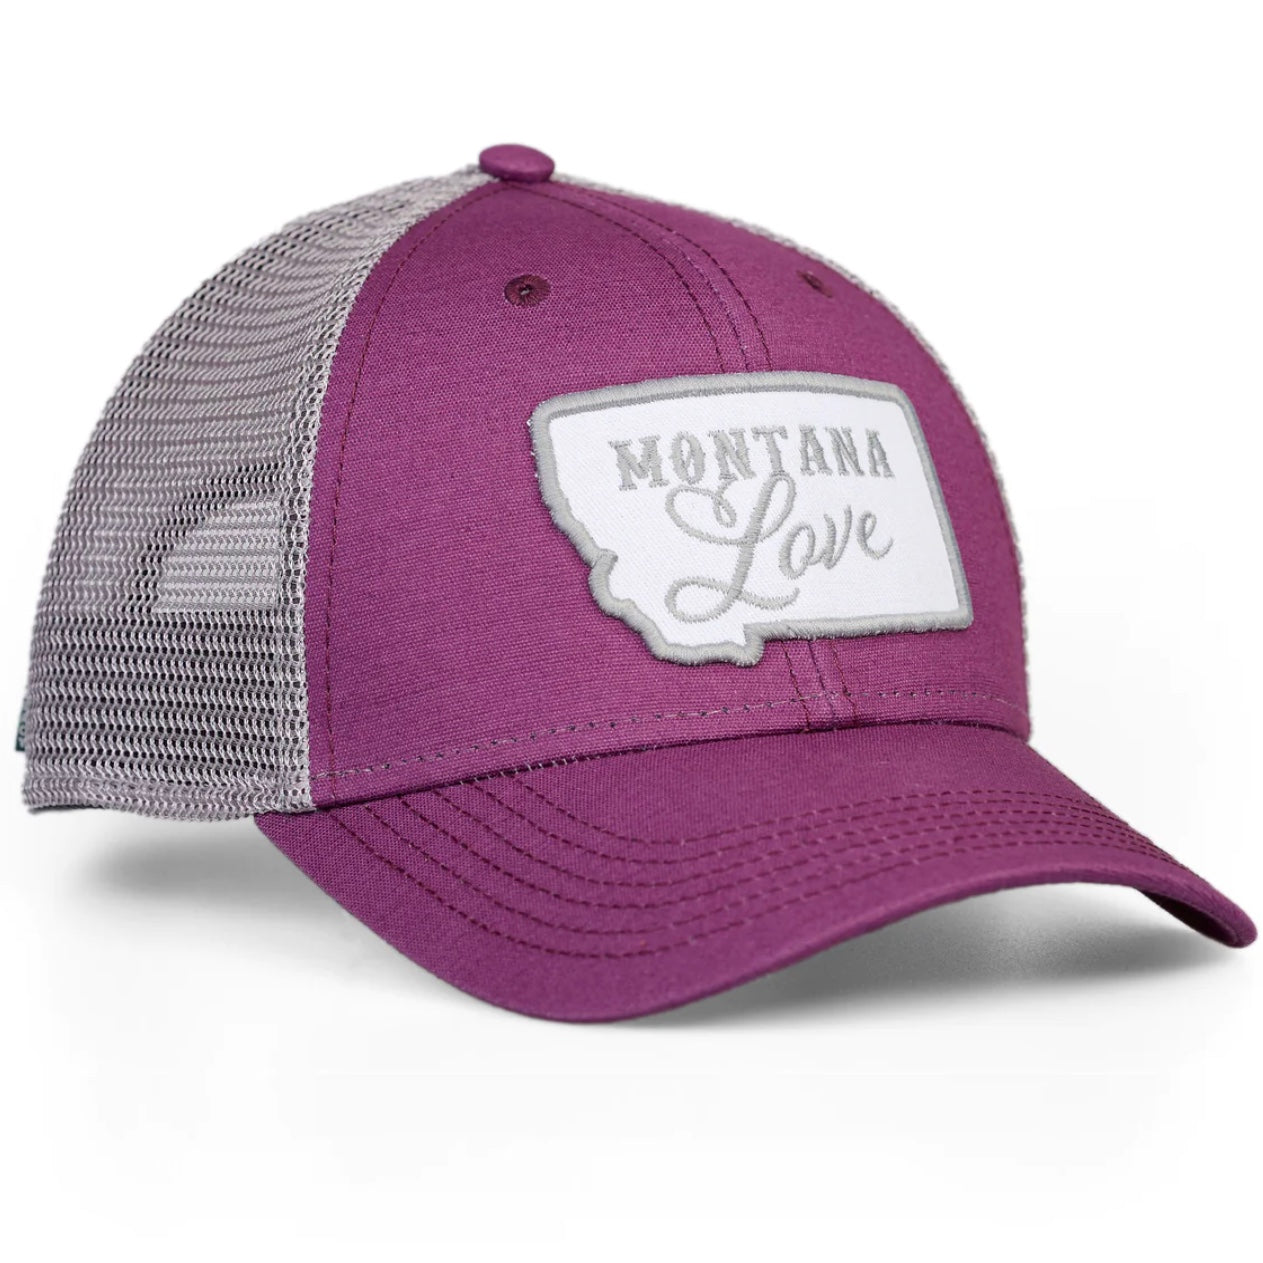 Montana Love Cap - Plum/Grey